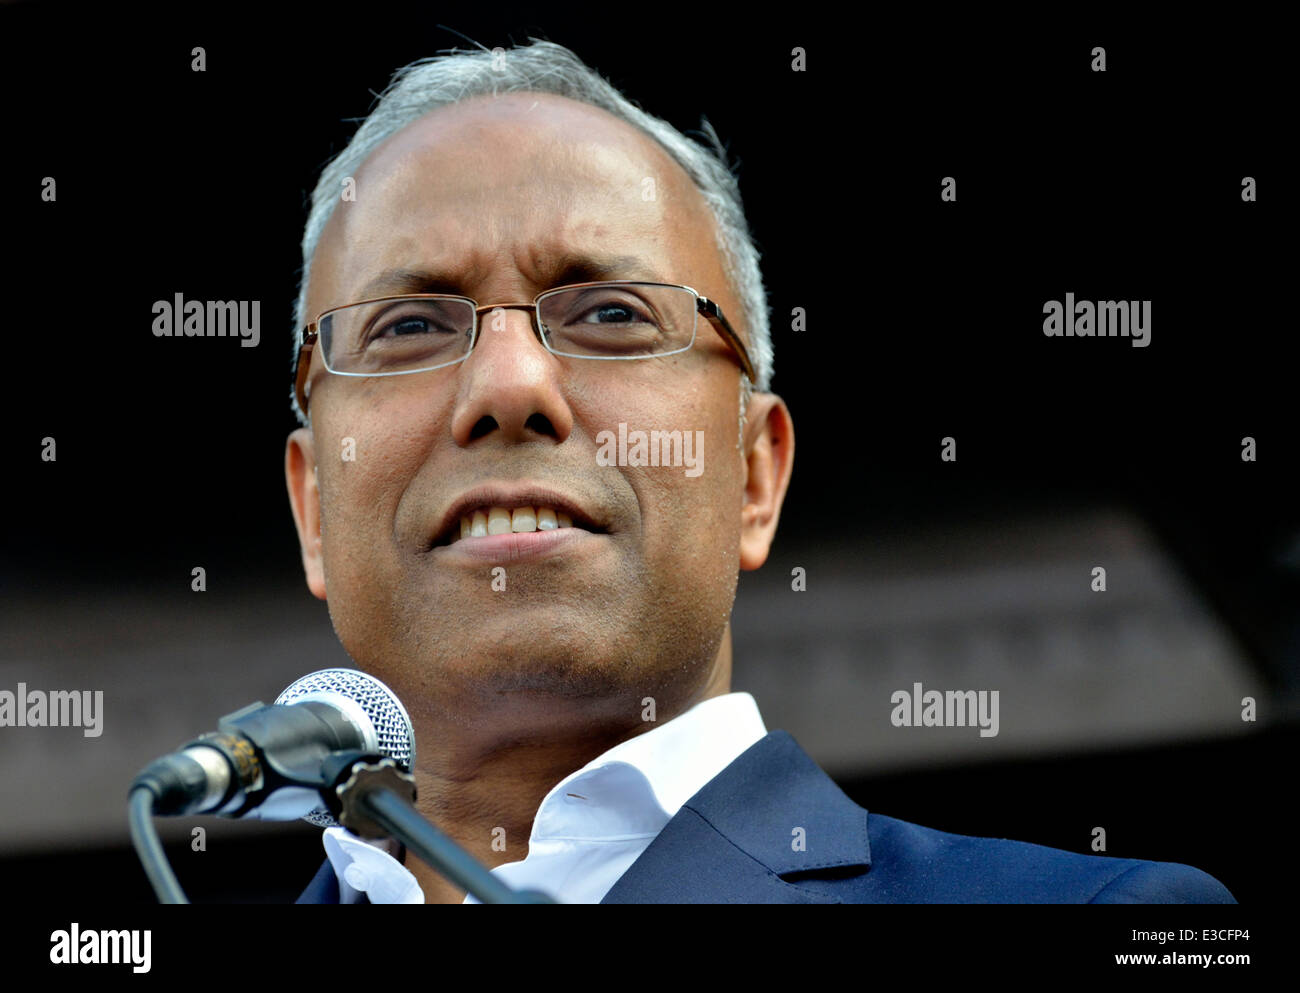 Lutfur Rahman - Sindaco di Tower Hamlets - parlando in un rally in piazza del Parlamento, Londra, 21 giugno 2014 Foto Stock